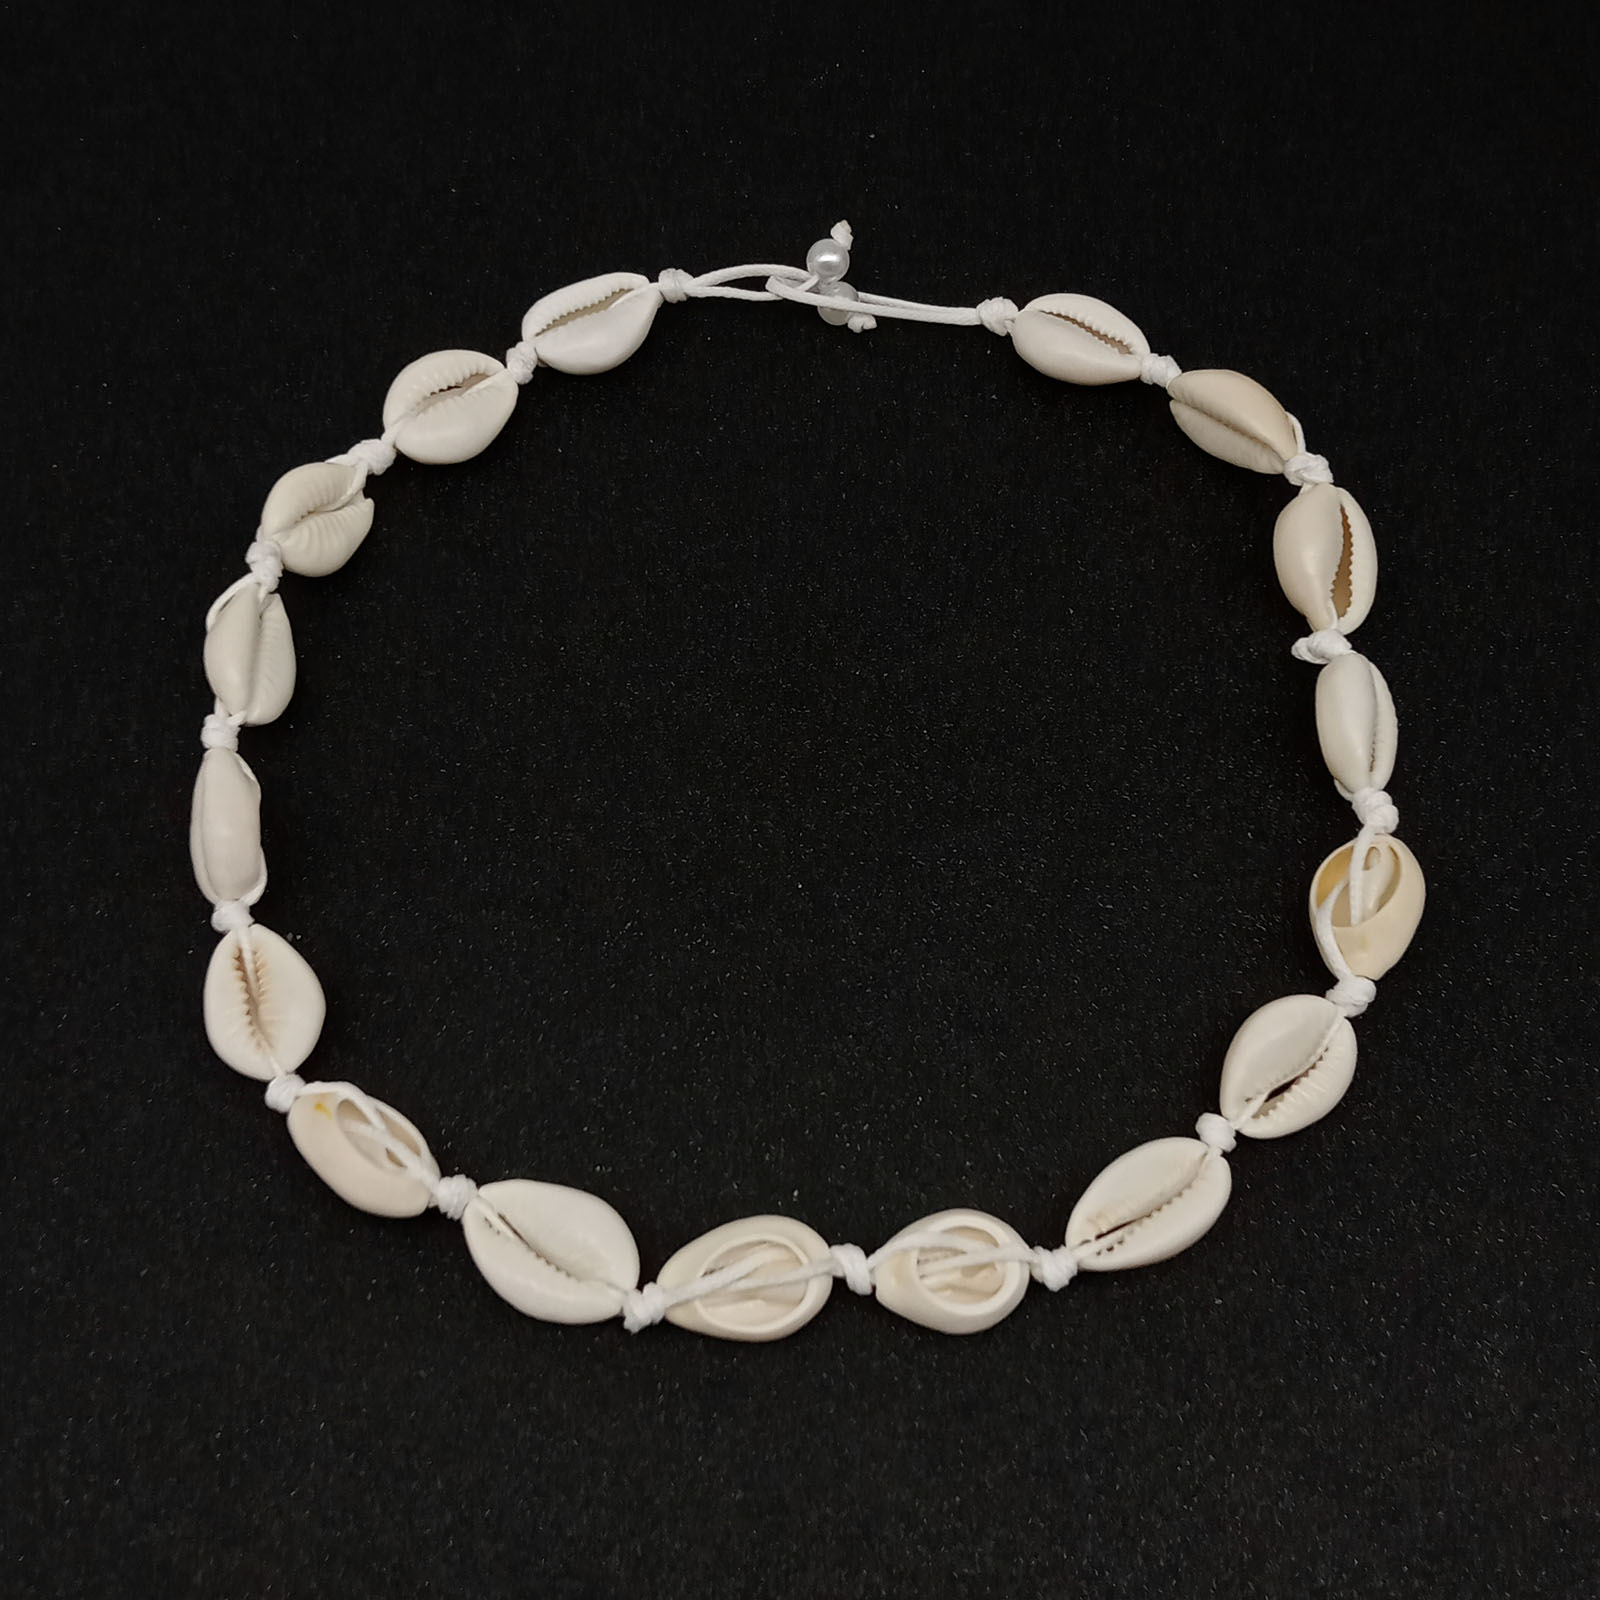 White rope+pearl shells